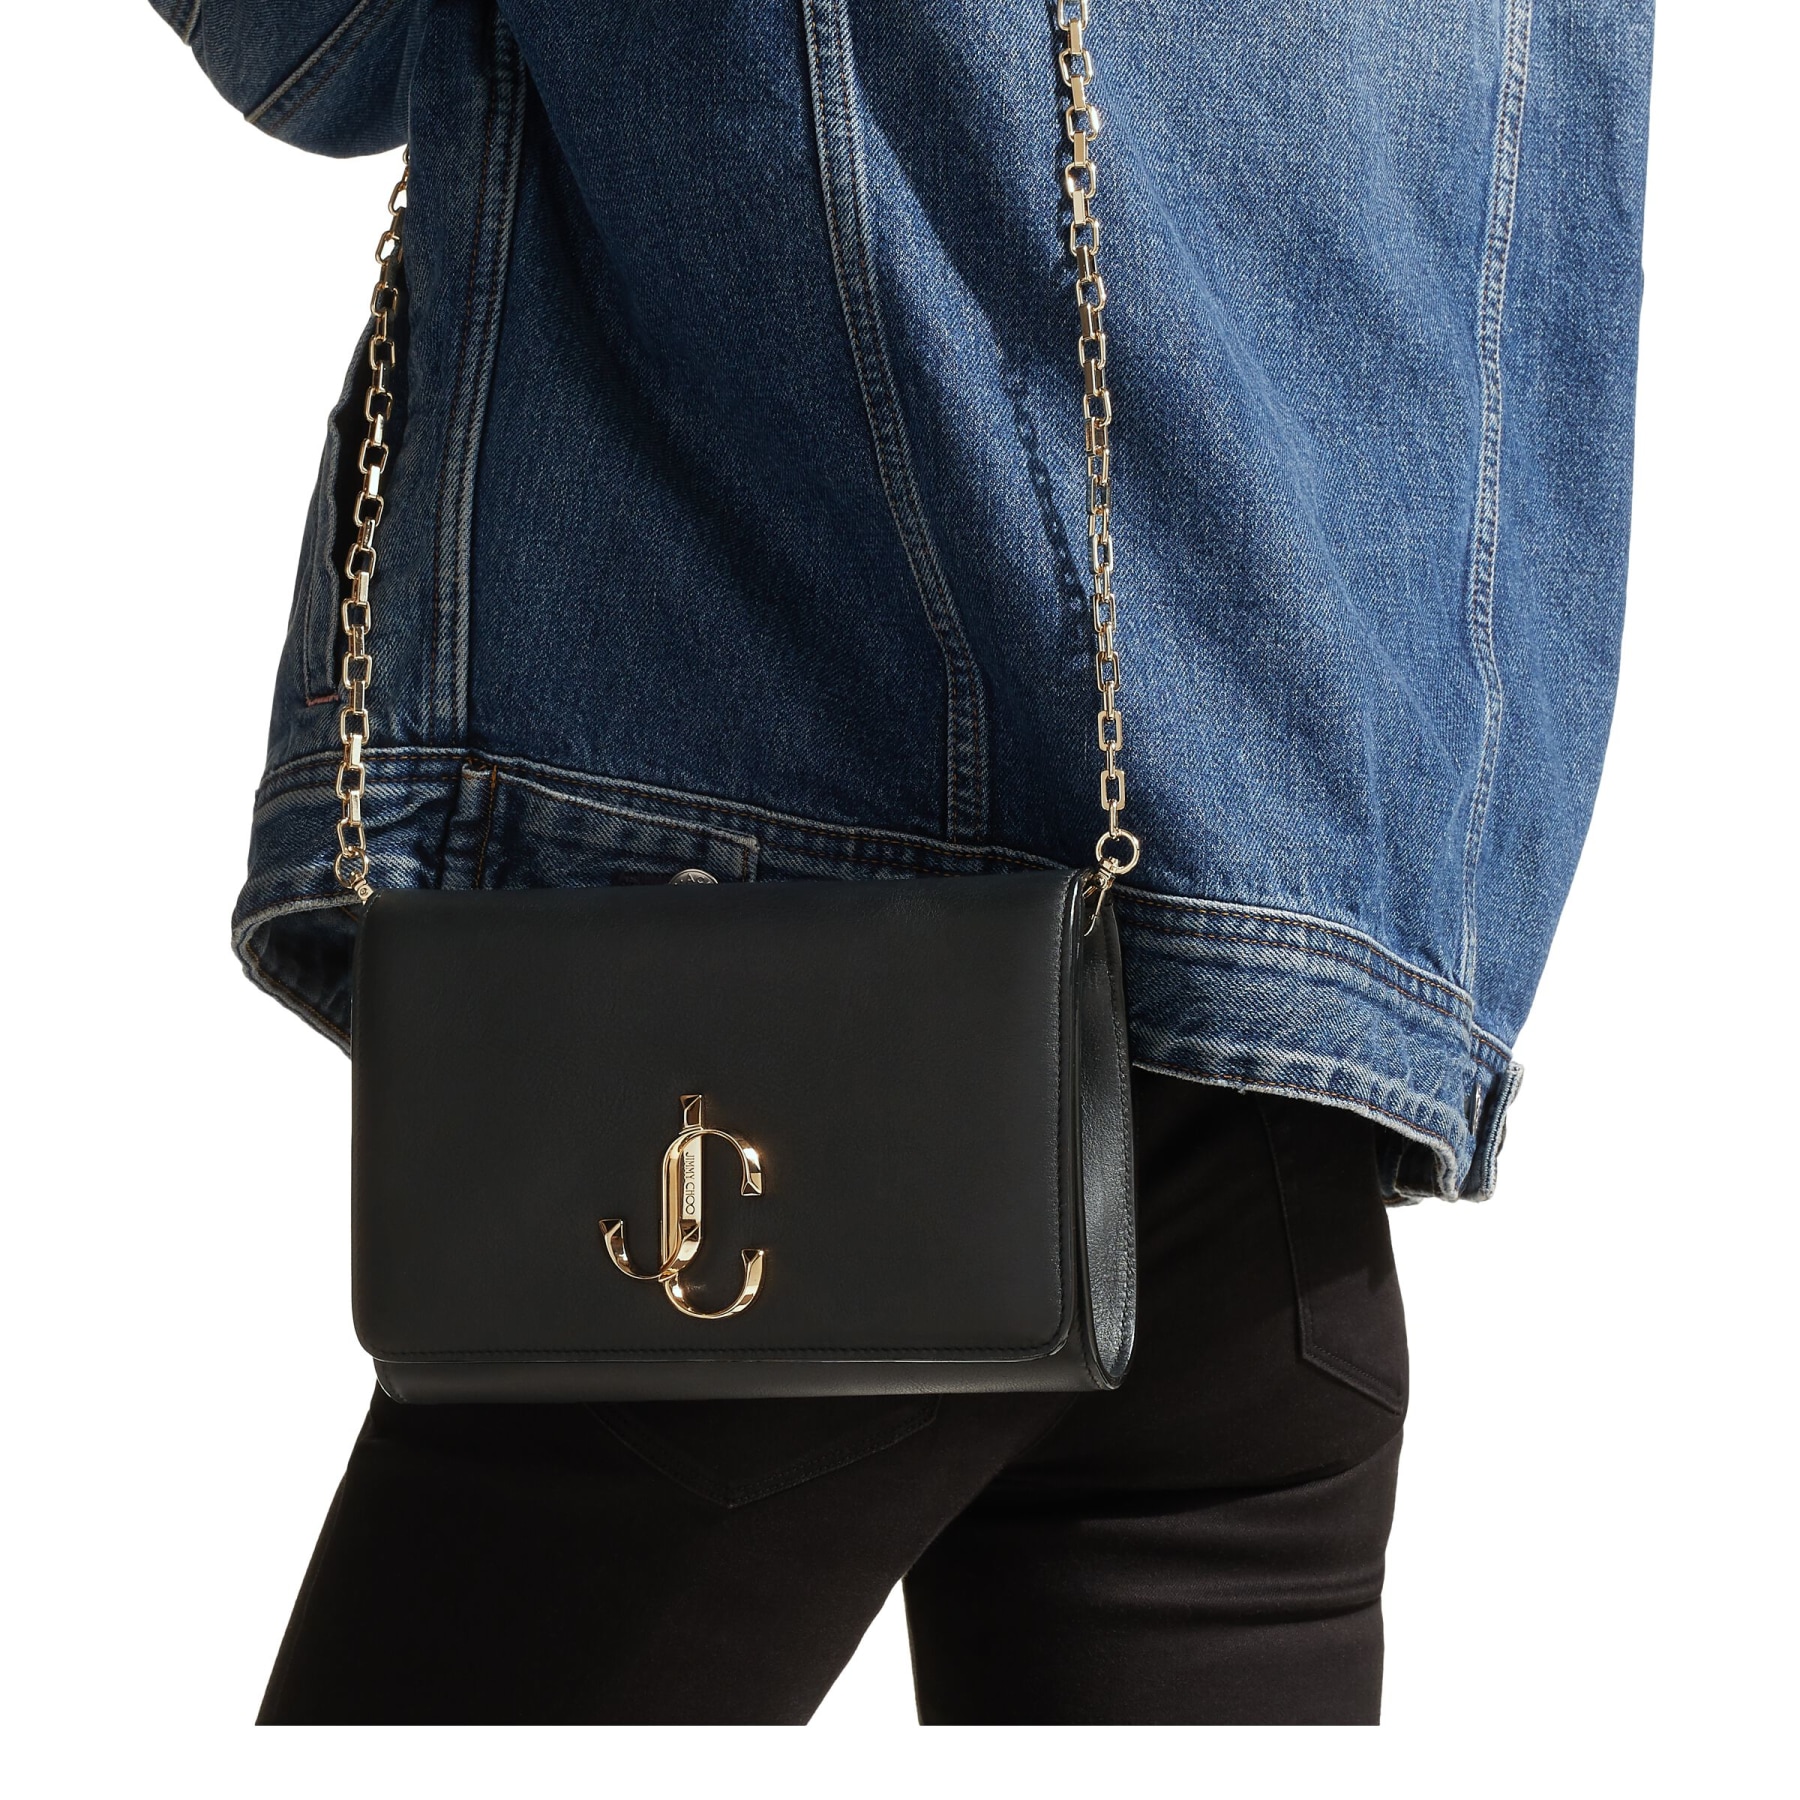 Black Calf Leather Clutch Bag with JC Logo|VARENNE CLUTCH| Autumn 